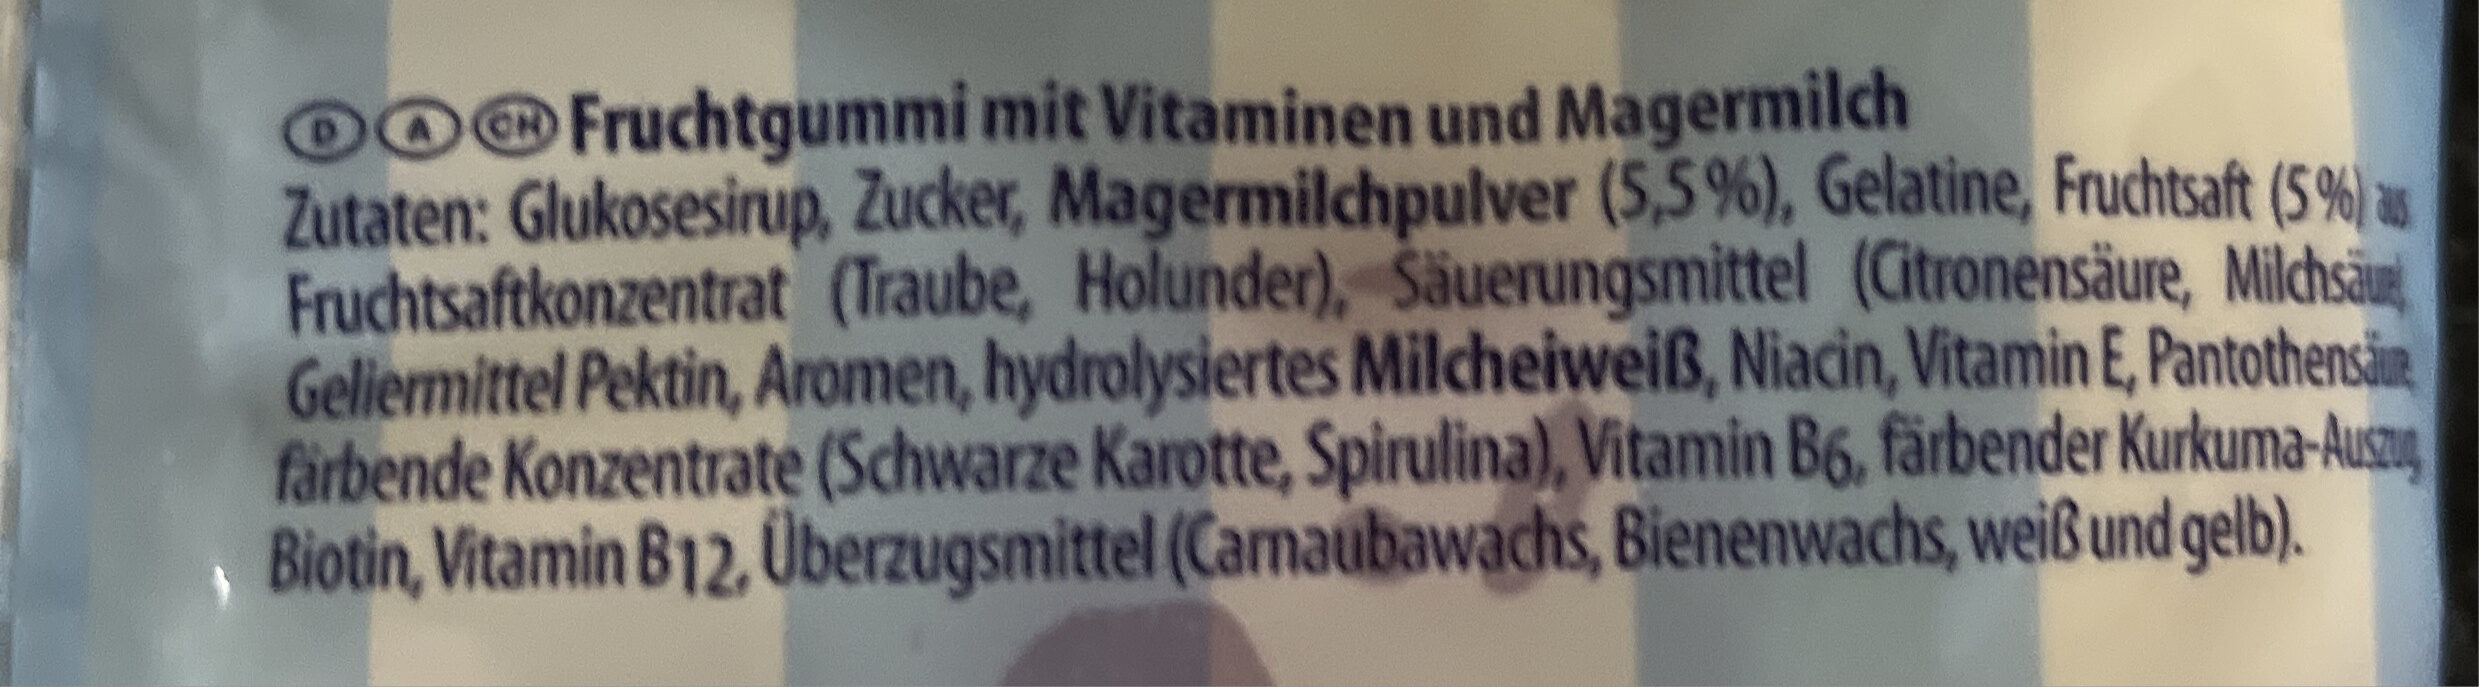 Lachgummi Milchbubis - Ingredienti - de